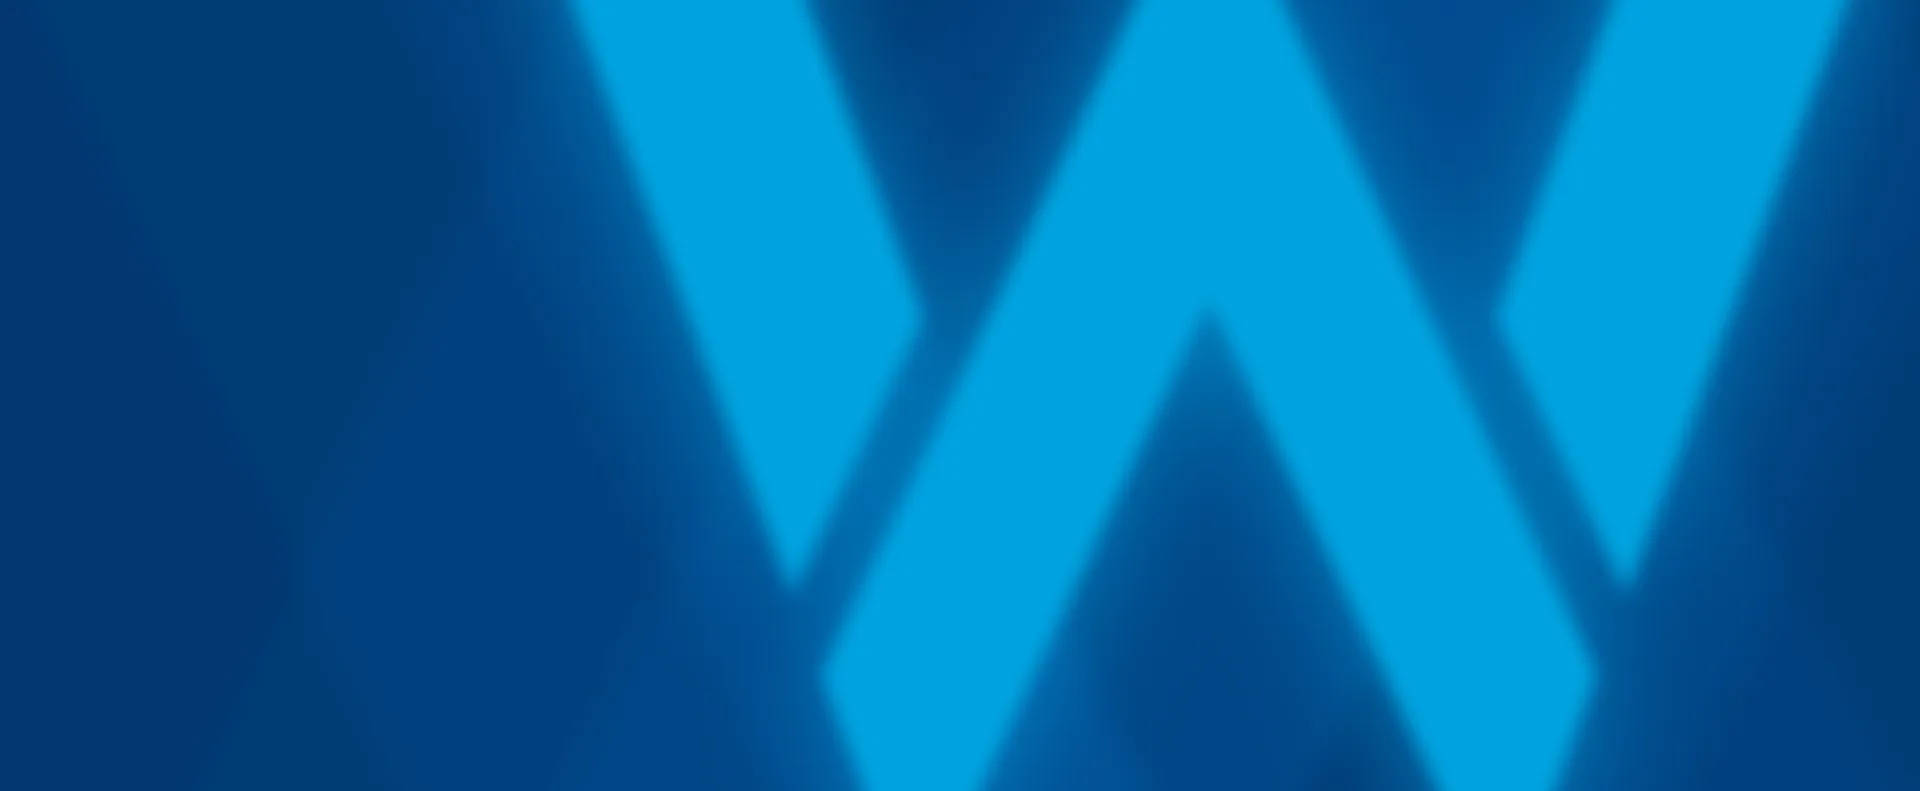 Blue Williams Logo Wallpaper